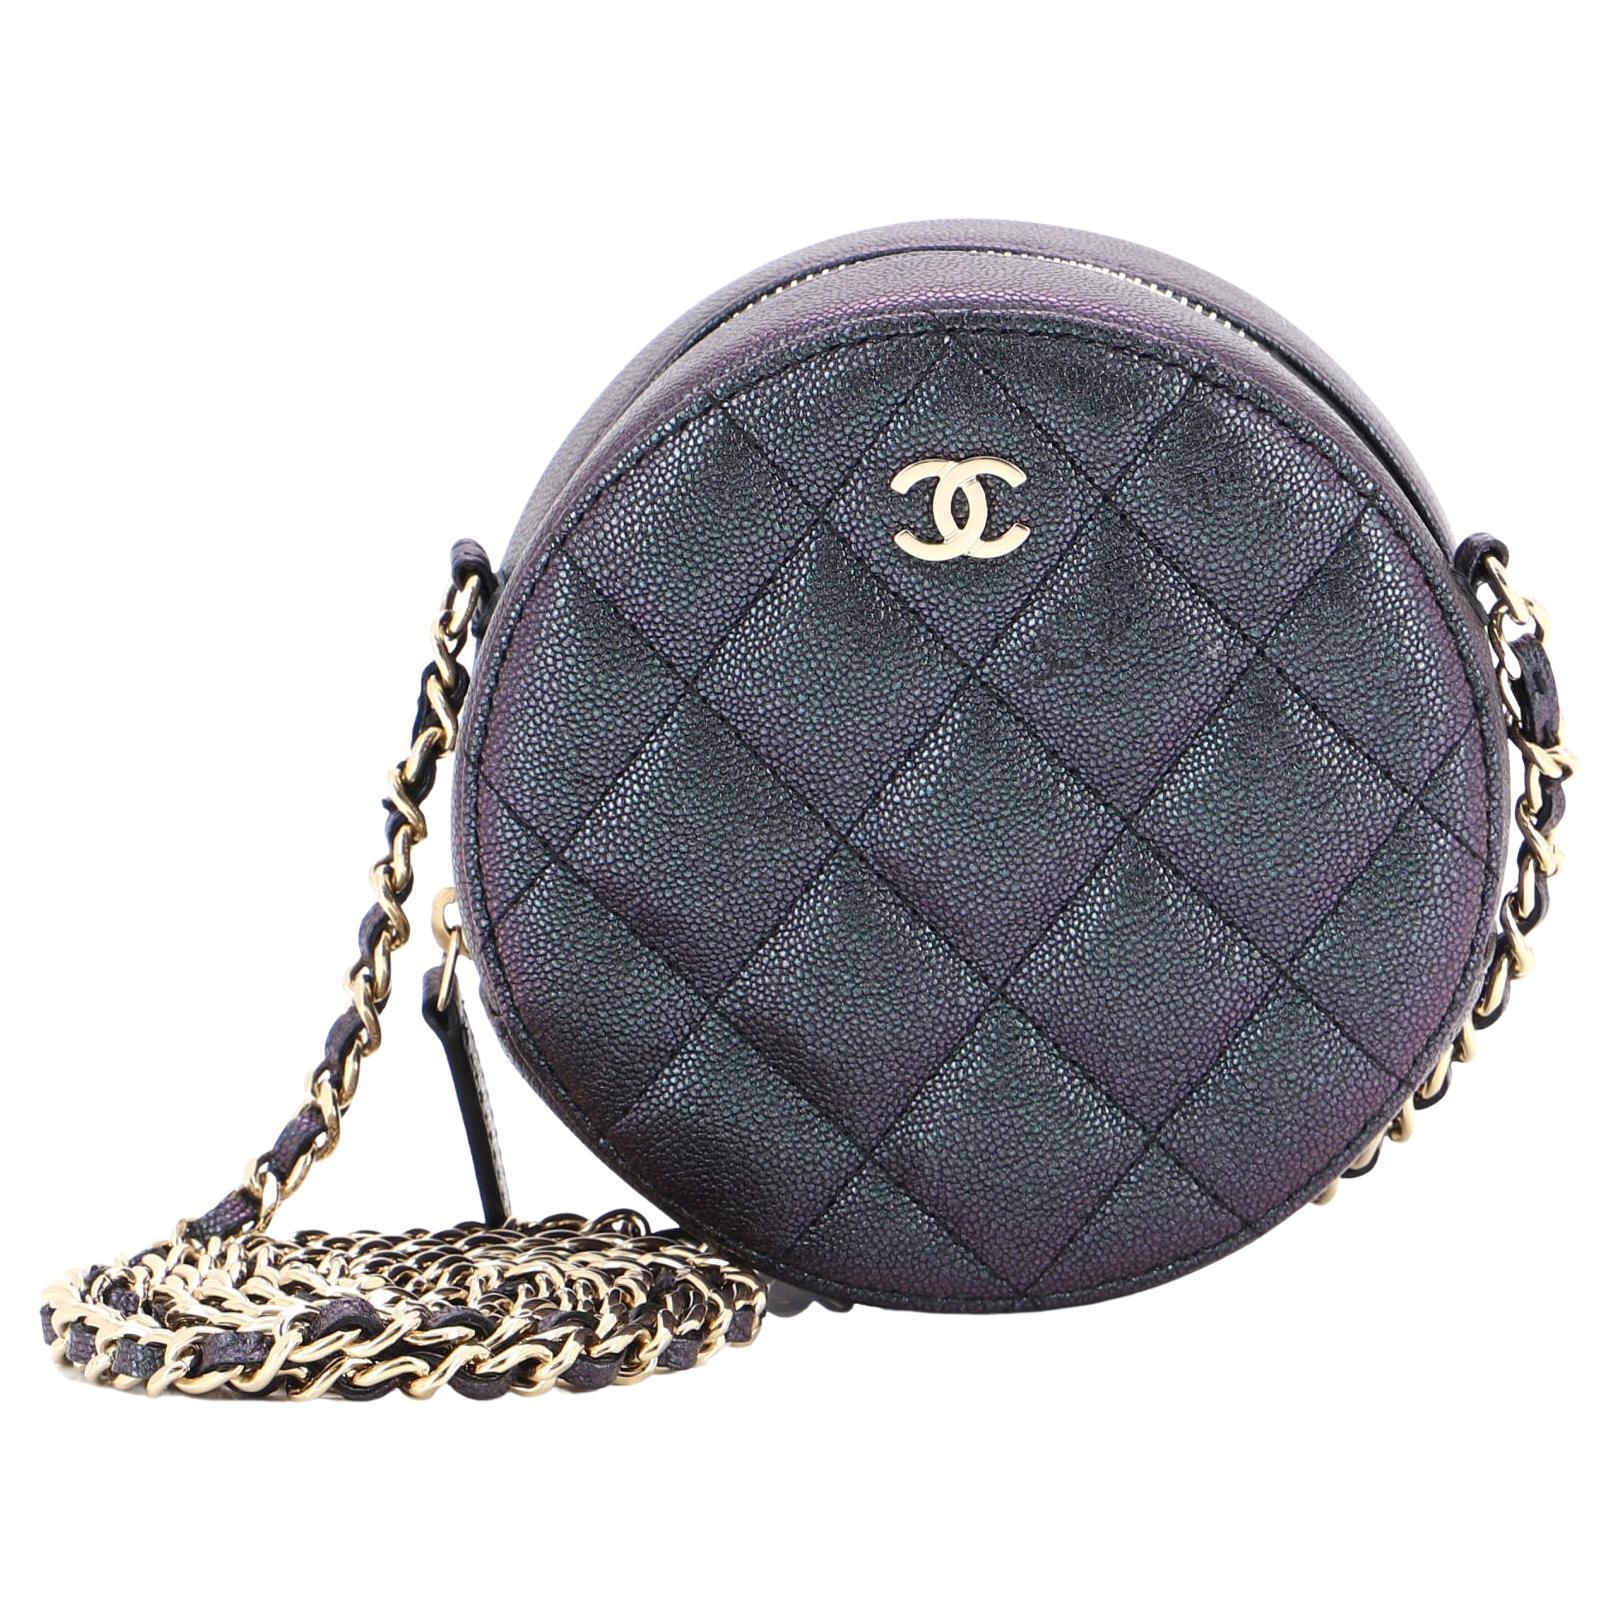 Chanel Round Classic Chain Clutch, Bragmybag